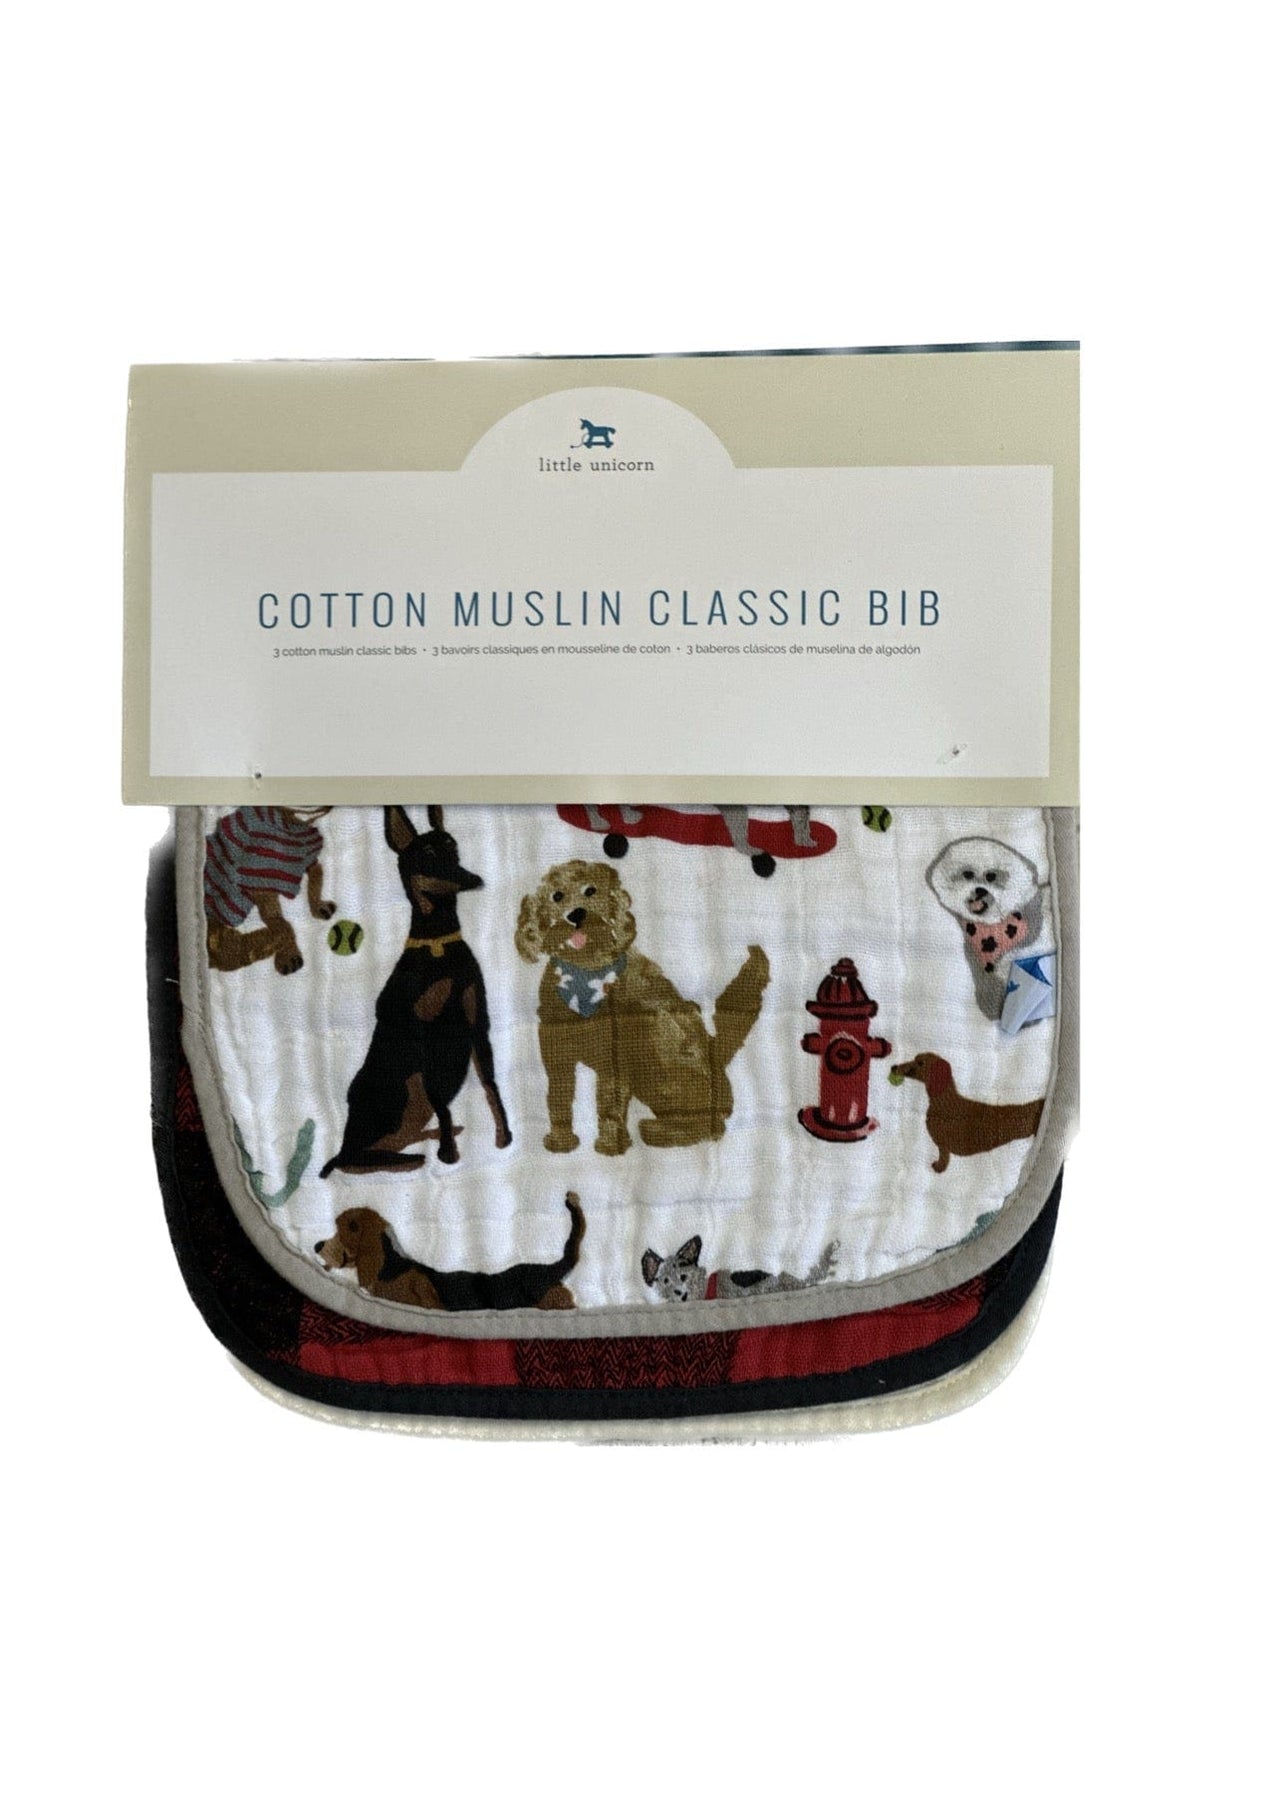 Classic Bib Cotton Muslin by Little Unicorn Little Unicorn Bibs Woof